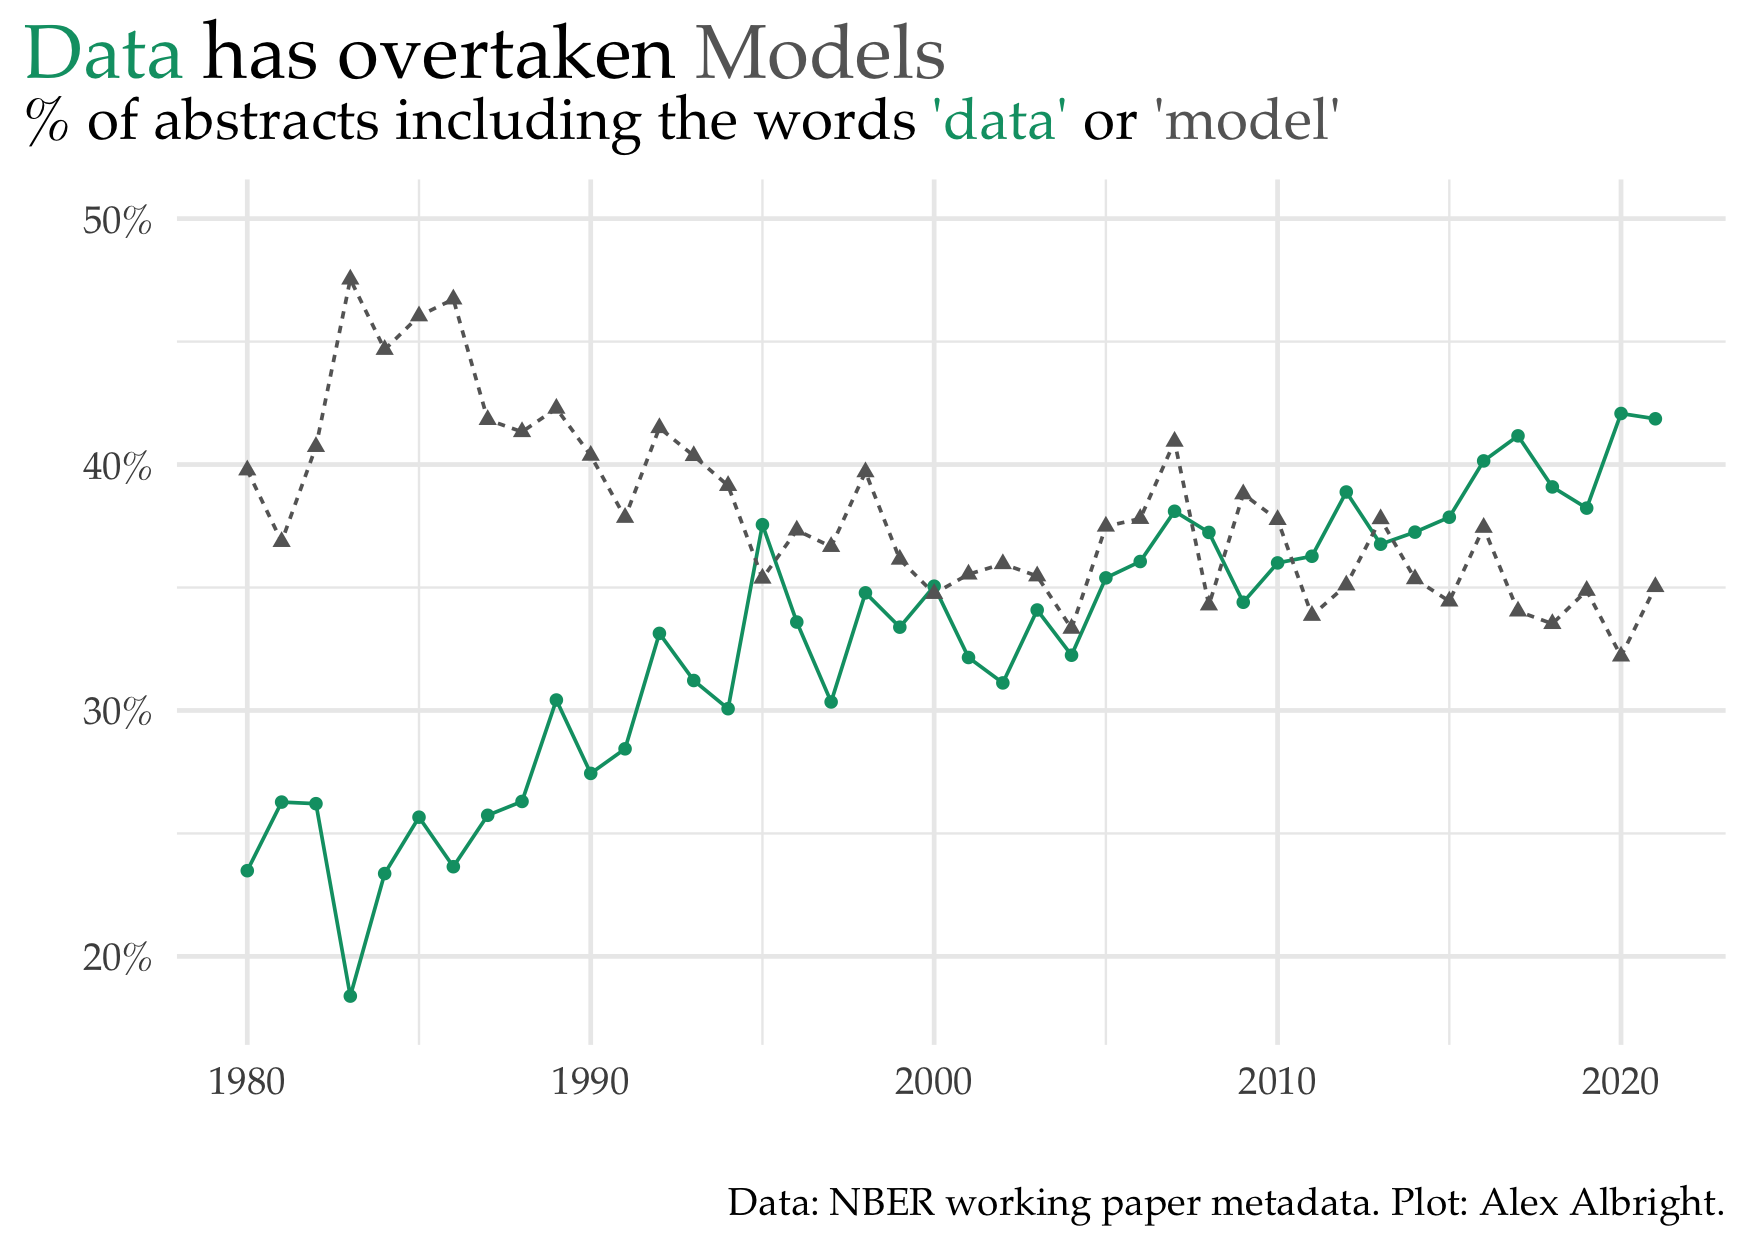 data overtakes models